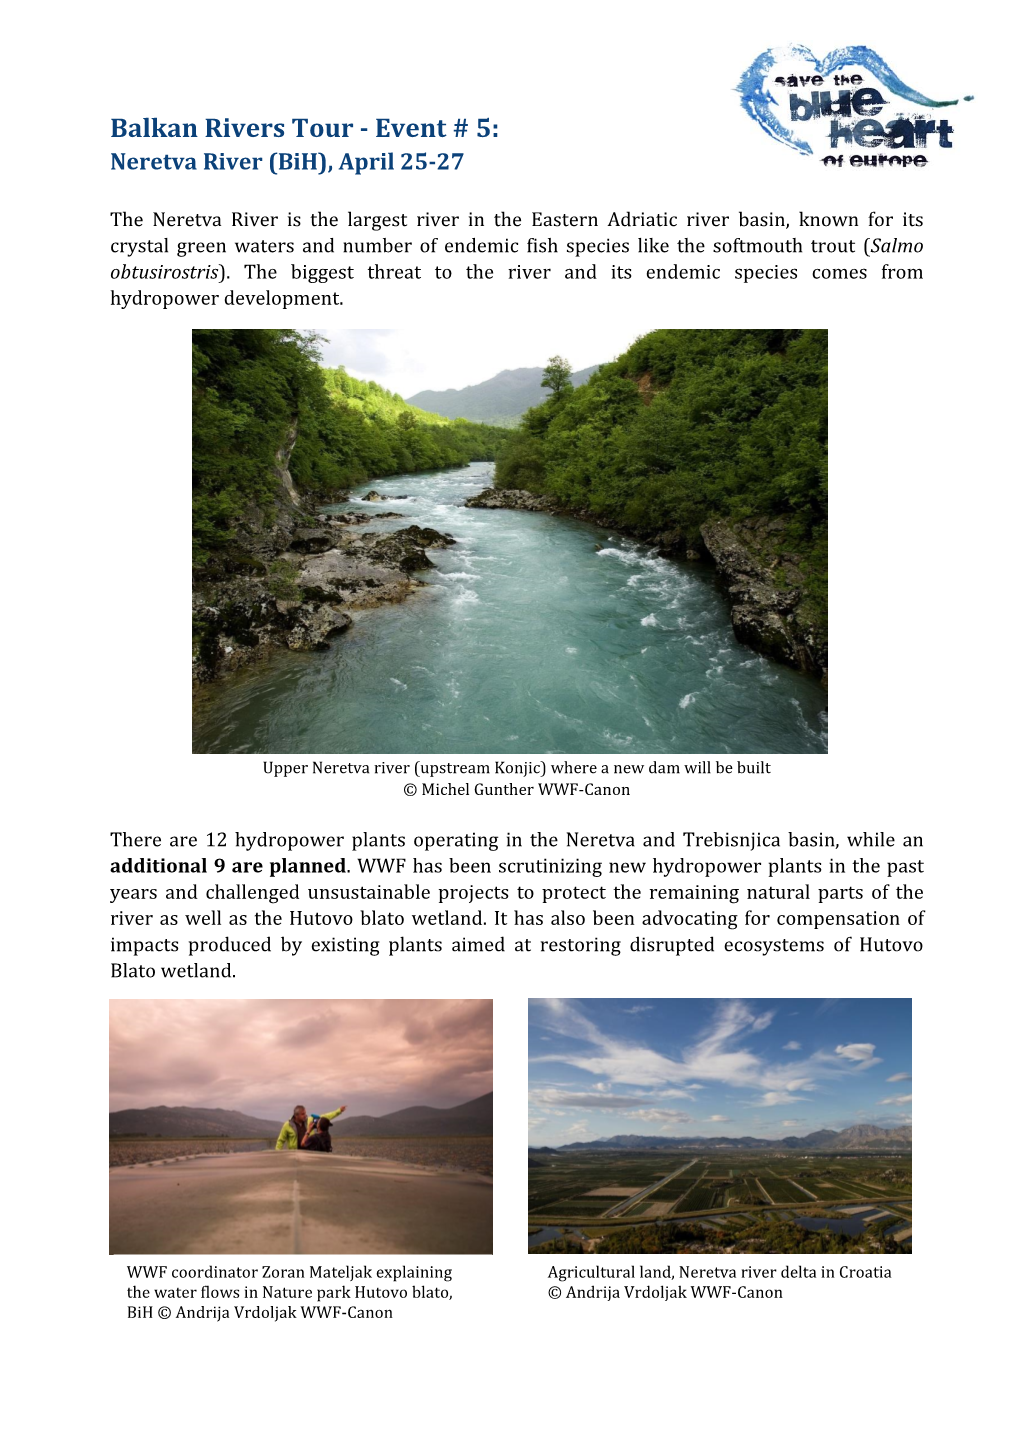 Balkan Rivers Tour - Event # 5: Neretva River (Bih), April 25-27